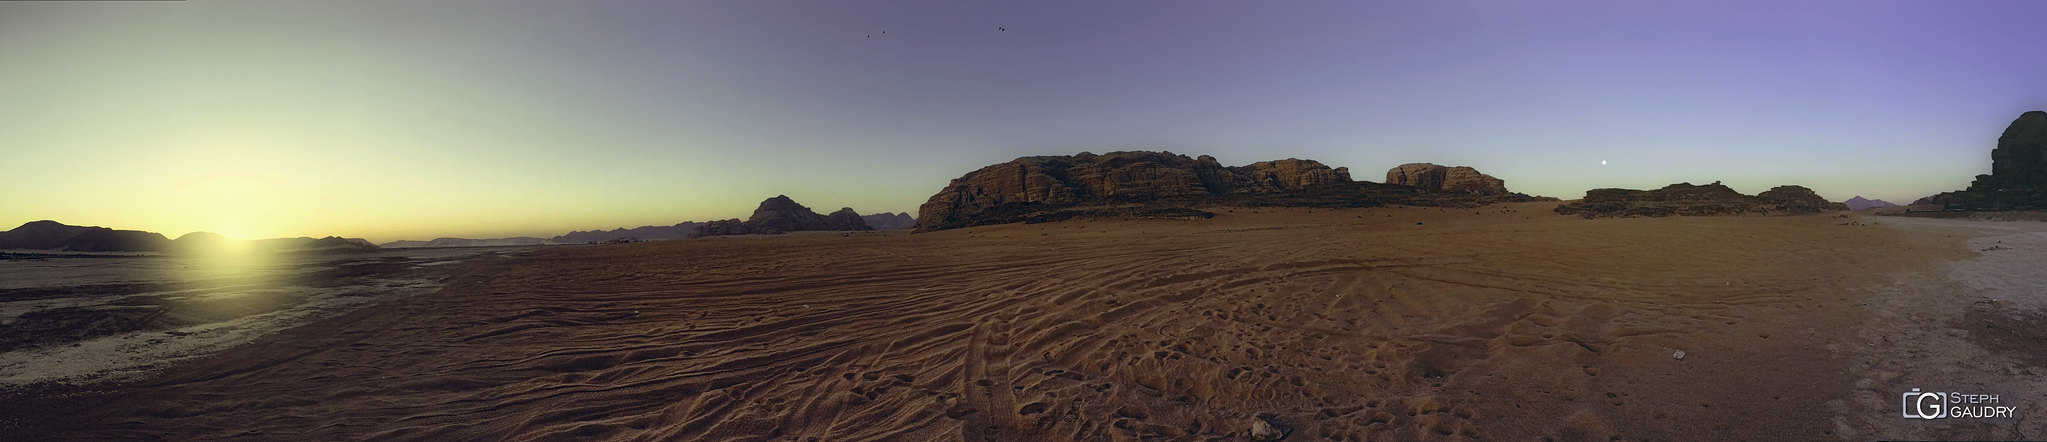 Jordanie / Wadi-Rum panorama gsm